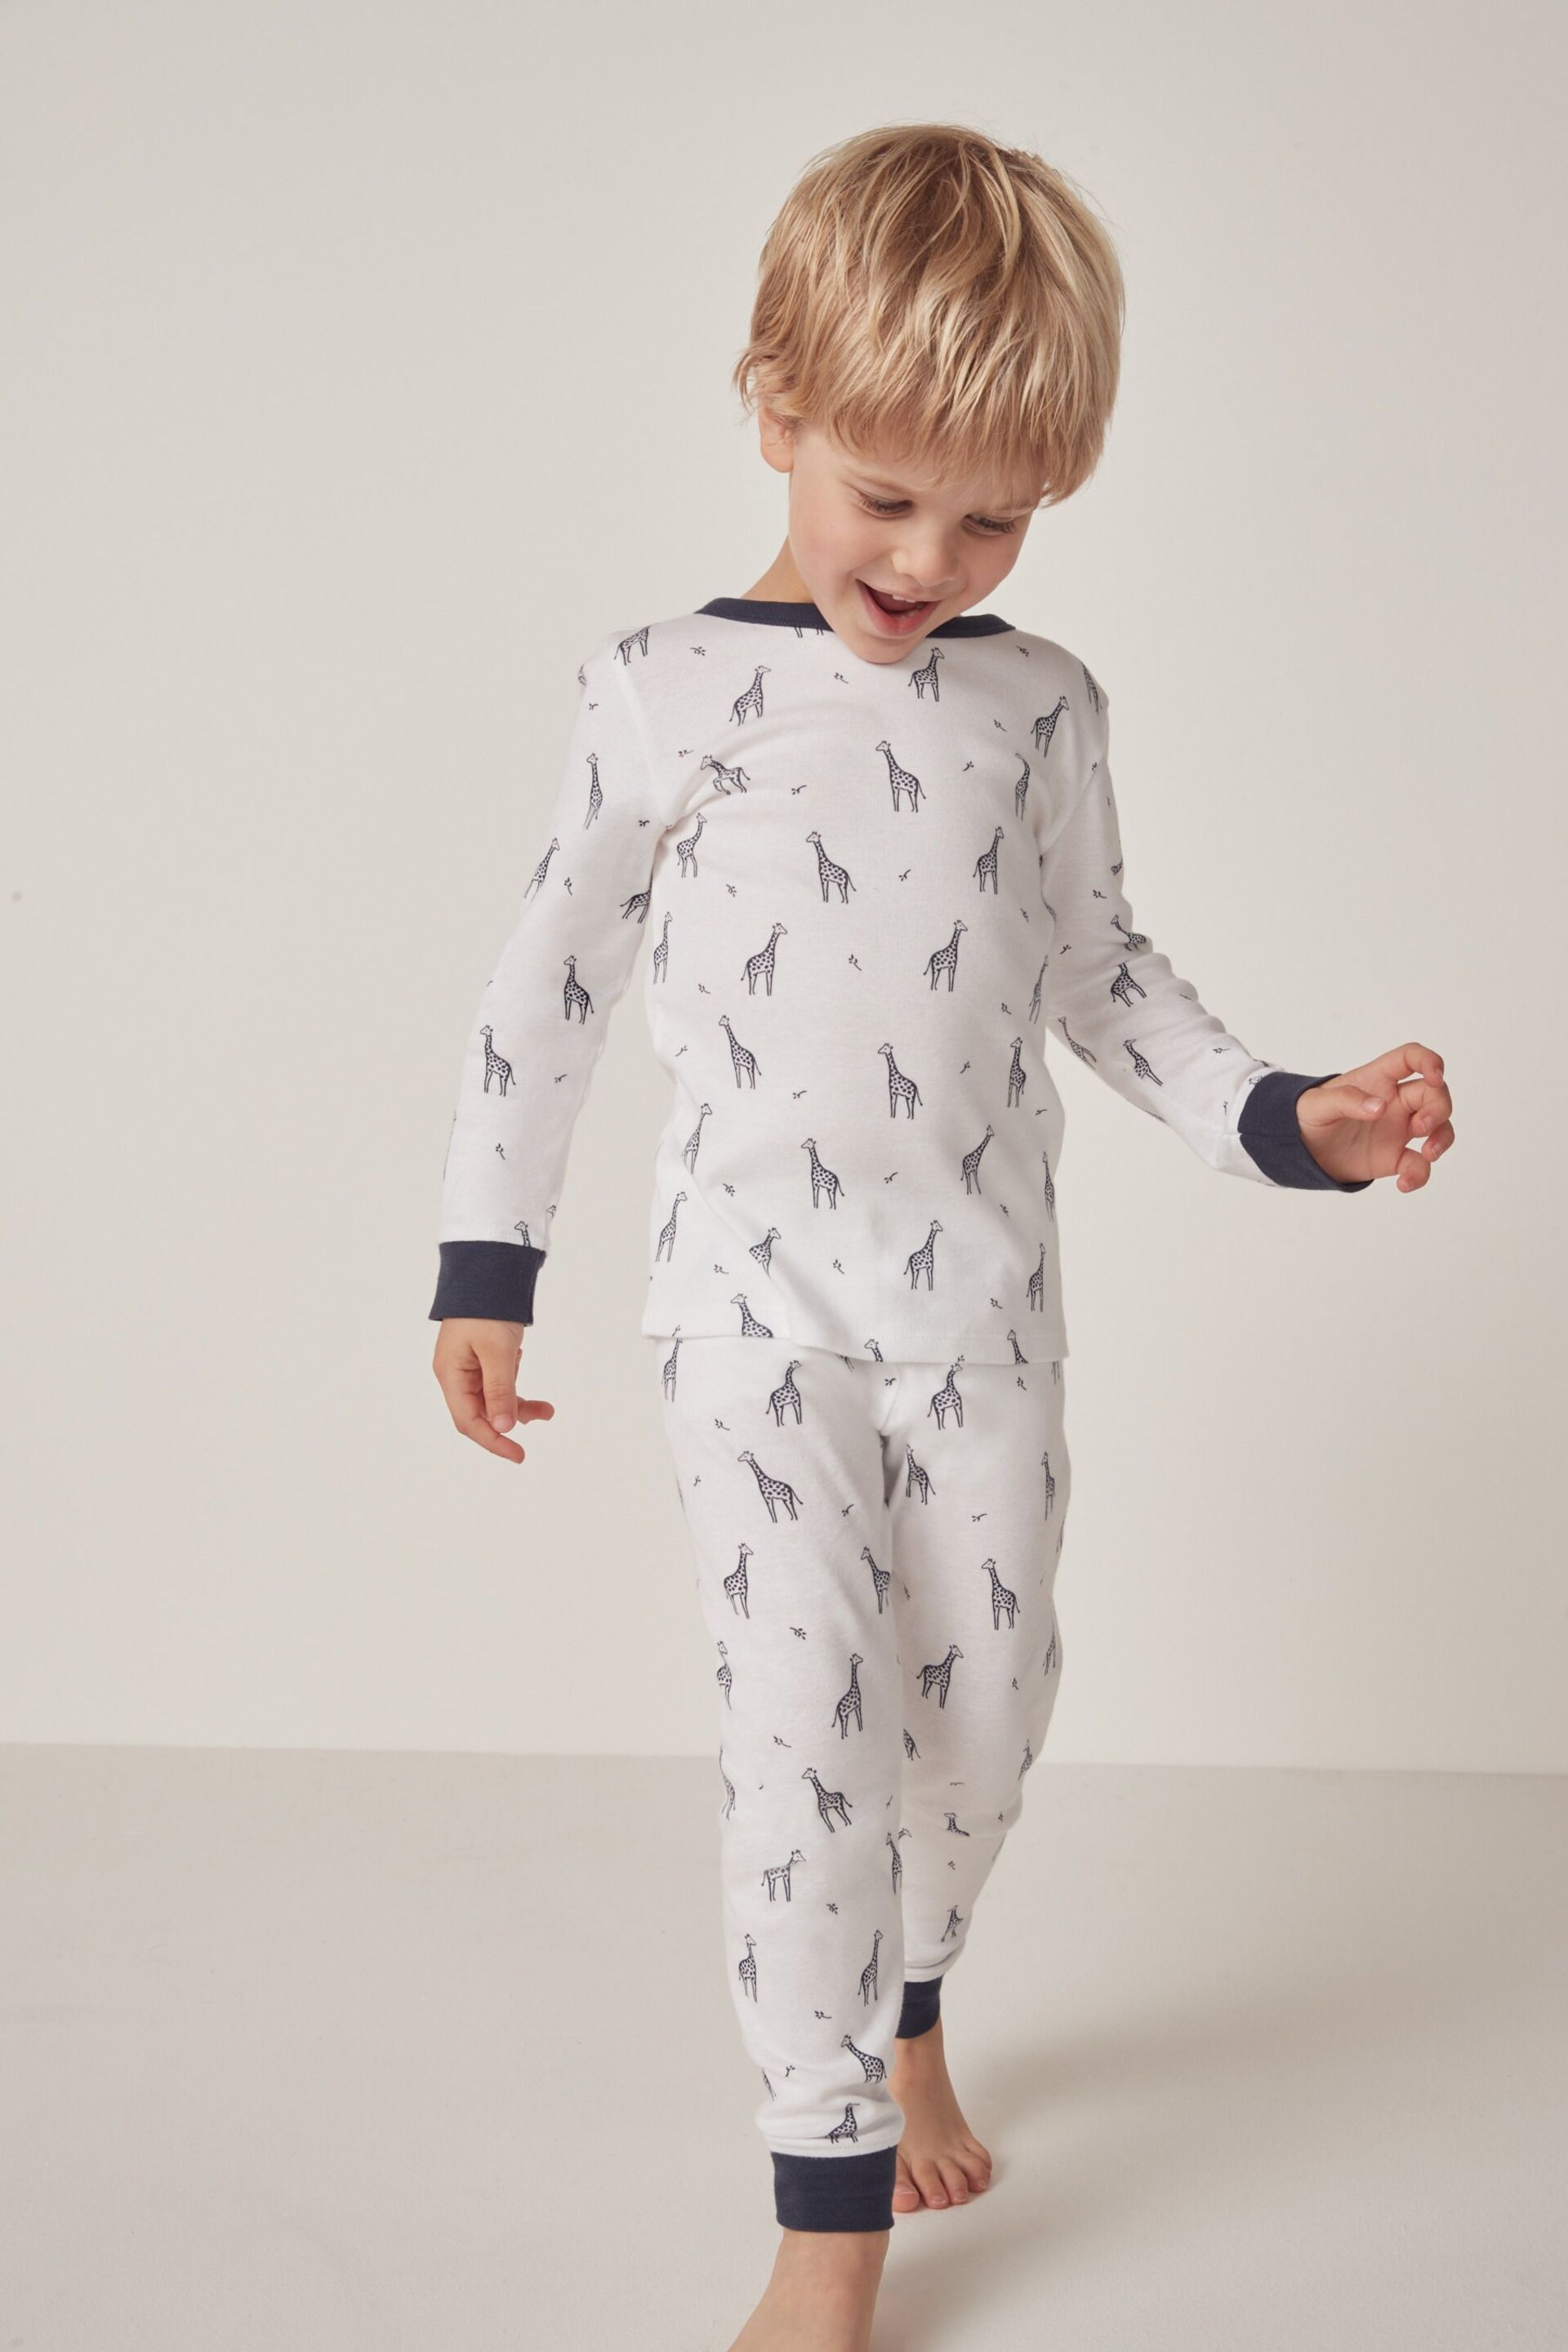 The White Company Cotton Giraffe Print White Pyjamas - Image 1 of 6